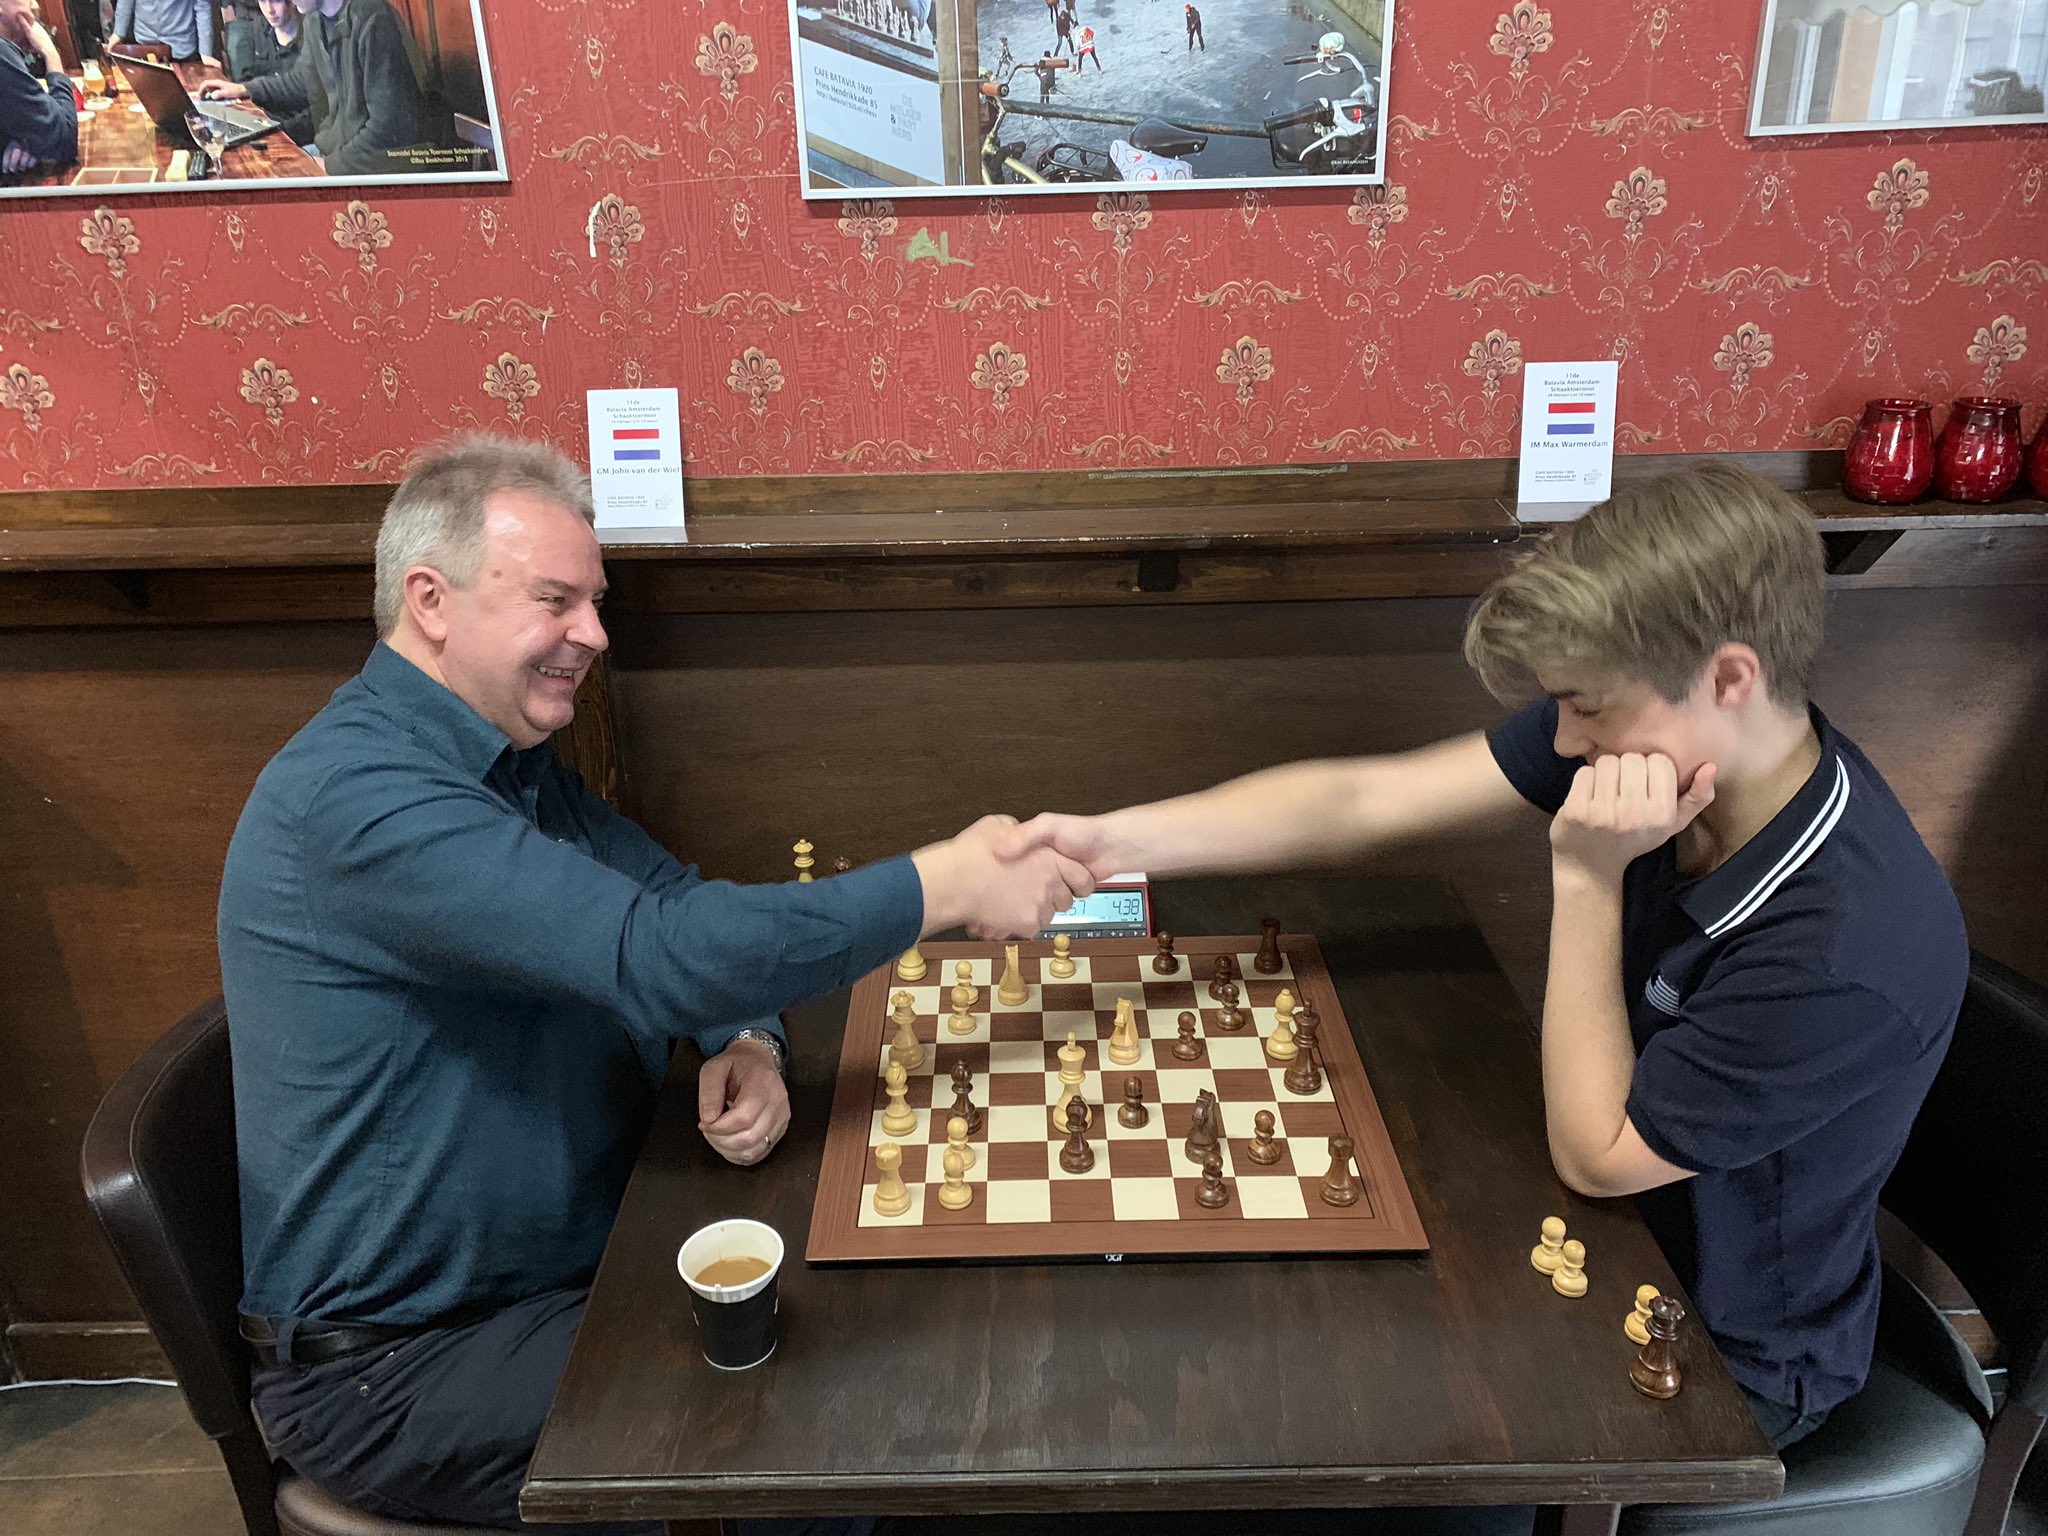 ChesscomLive on Twitter: "Check out this beautiful by IM Max Warmerdam vs GM John van der Wiel: https://t.co/mvc3Oim6bv #bataviachess @bataviachess https://t.co/5bzOy1iEuk" / Twitter